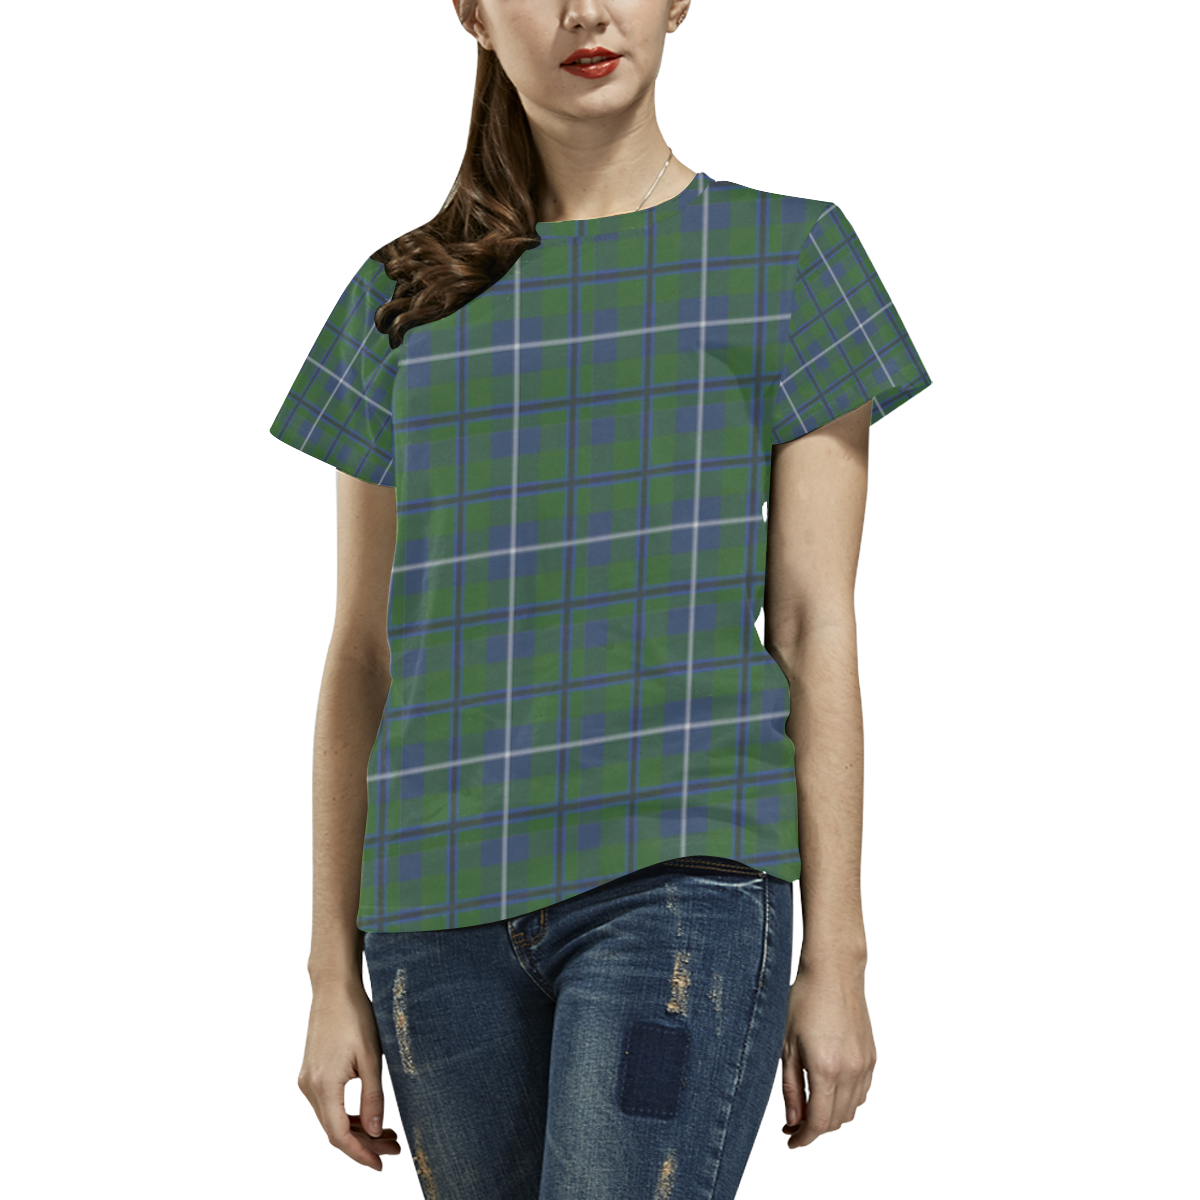 Douglas Tartan All Over Print T-Shirt for Women (USA Size) (Model T40)